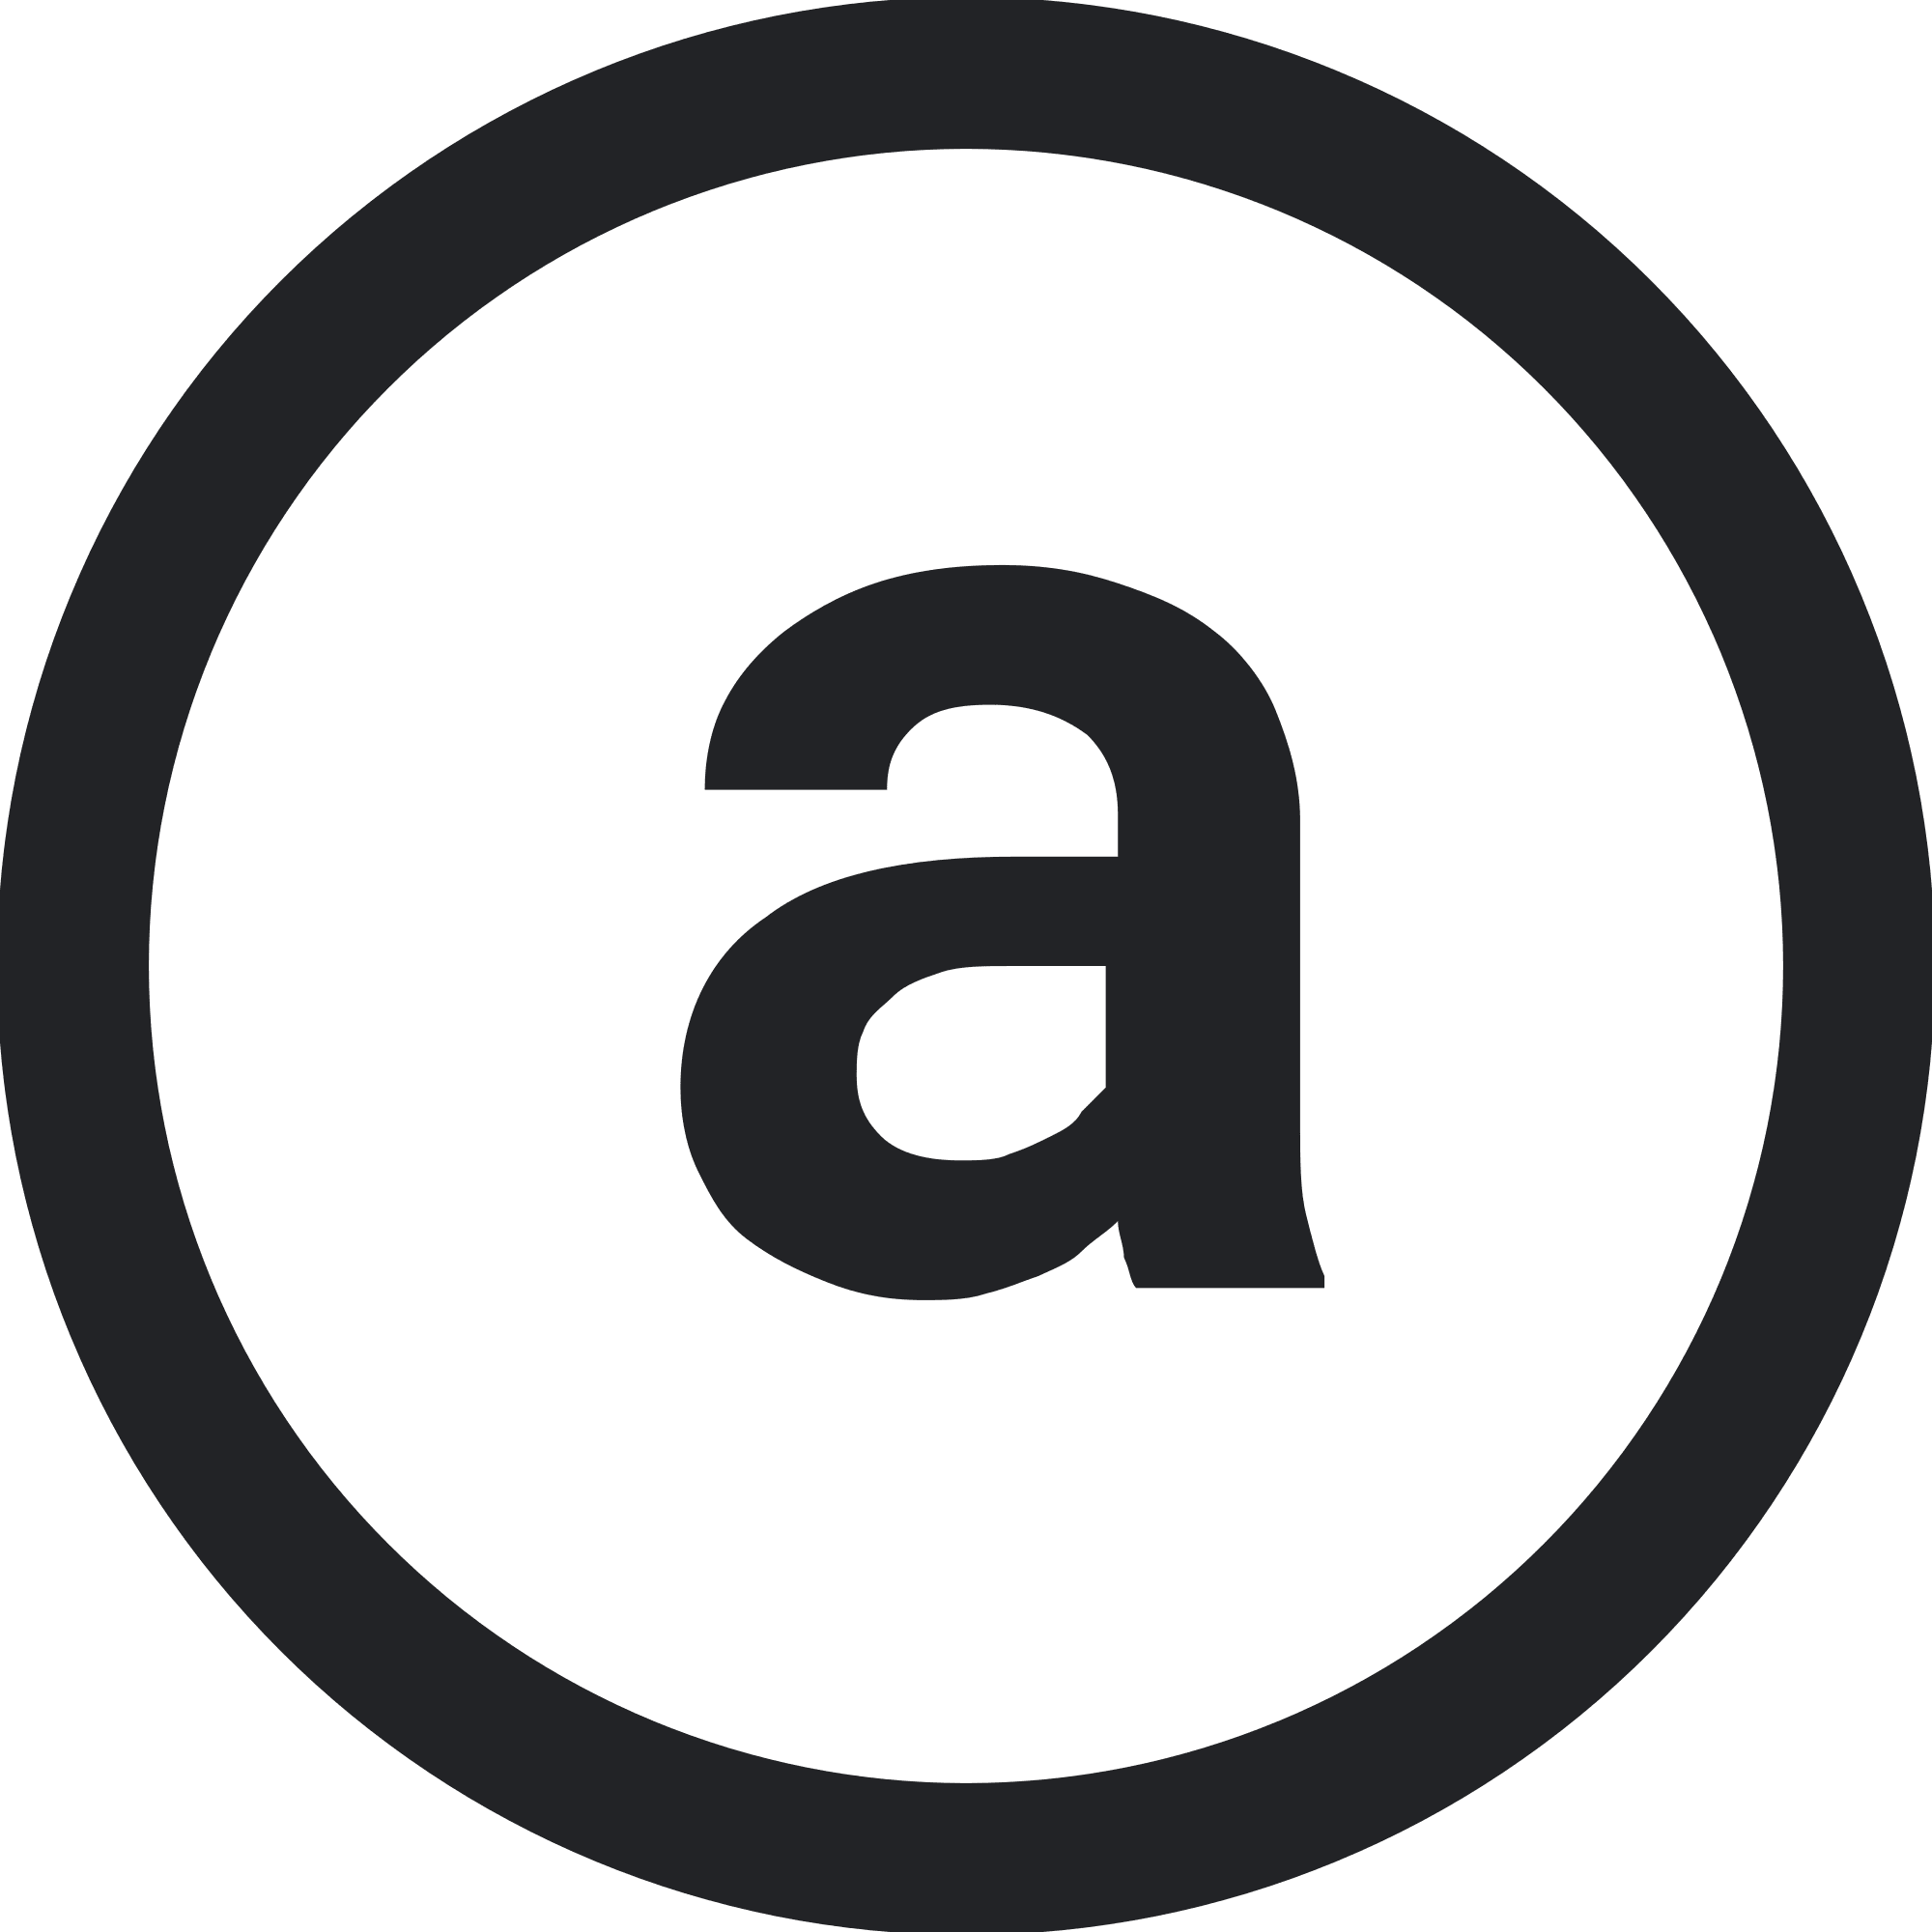 Arweave logo in png format